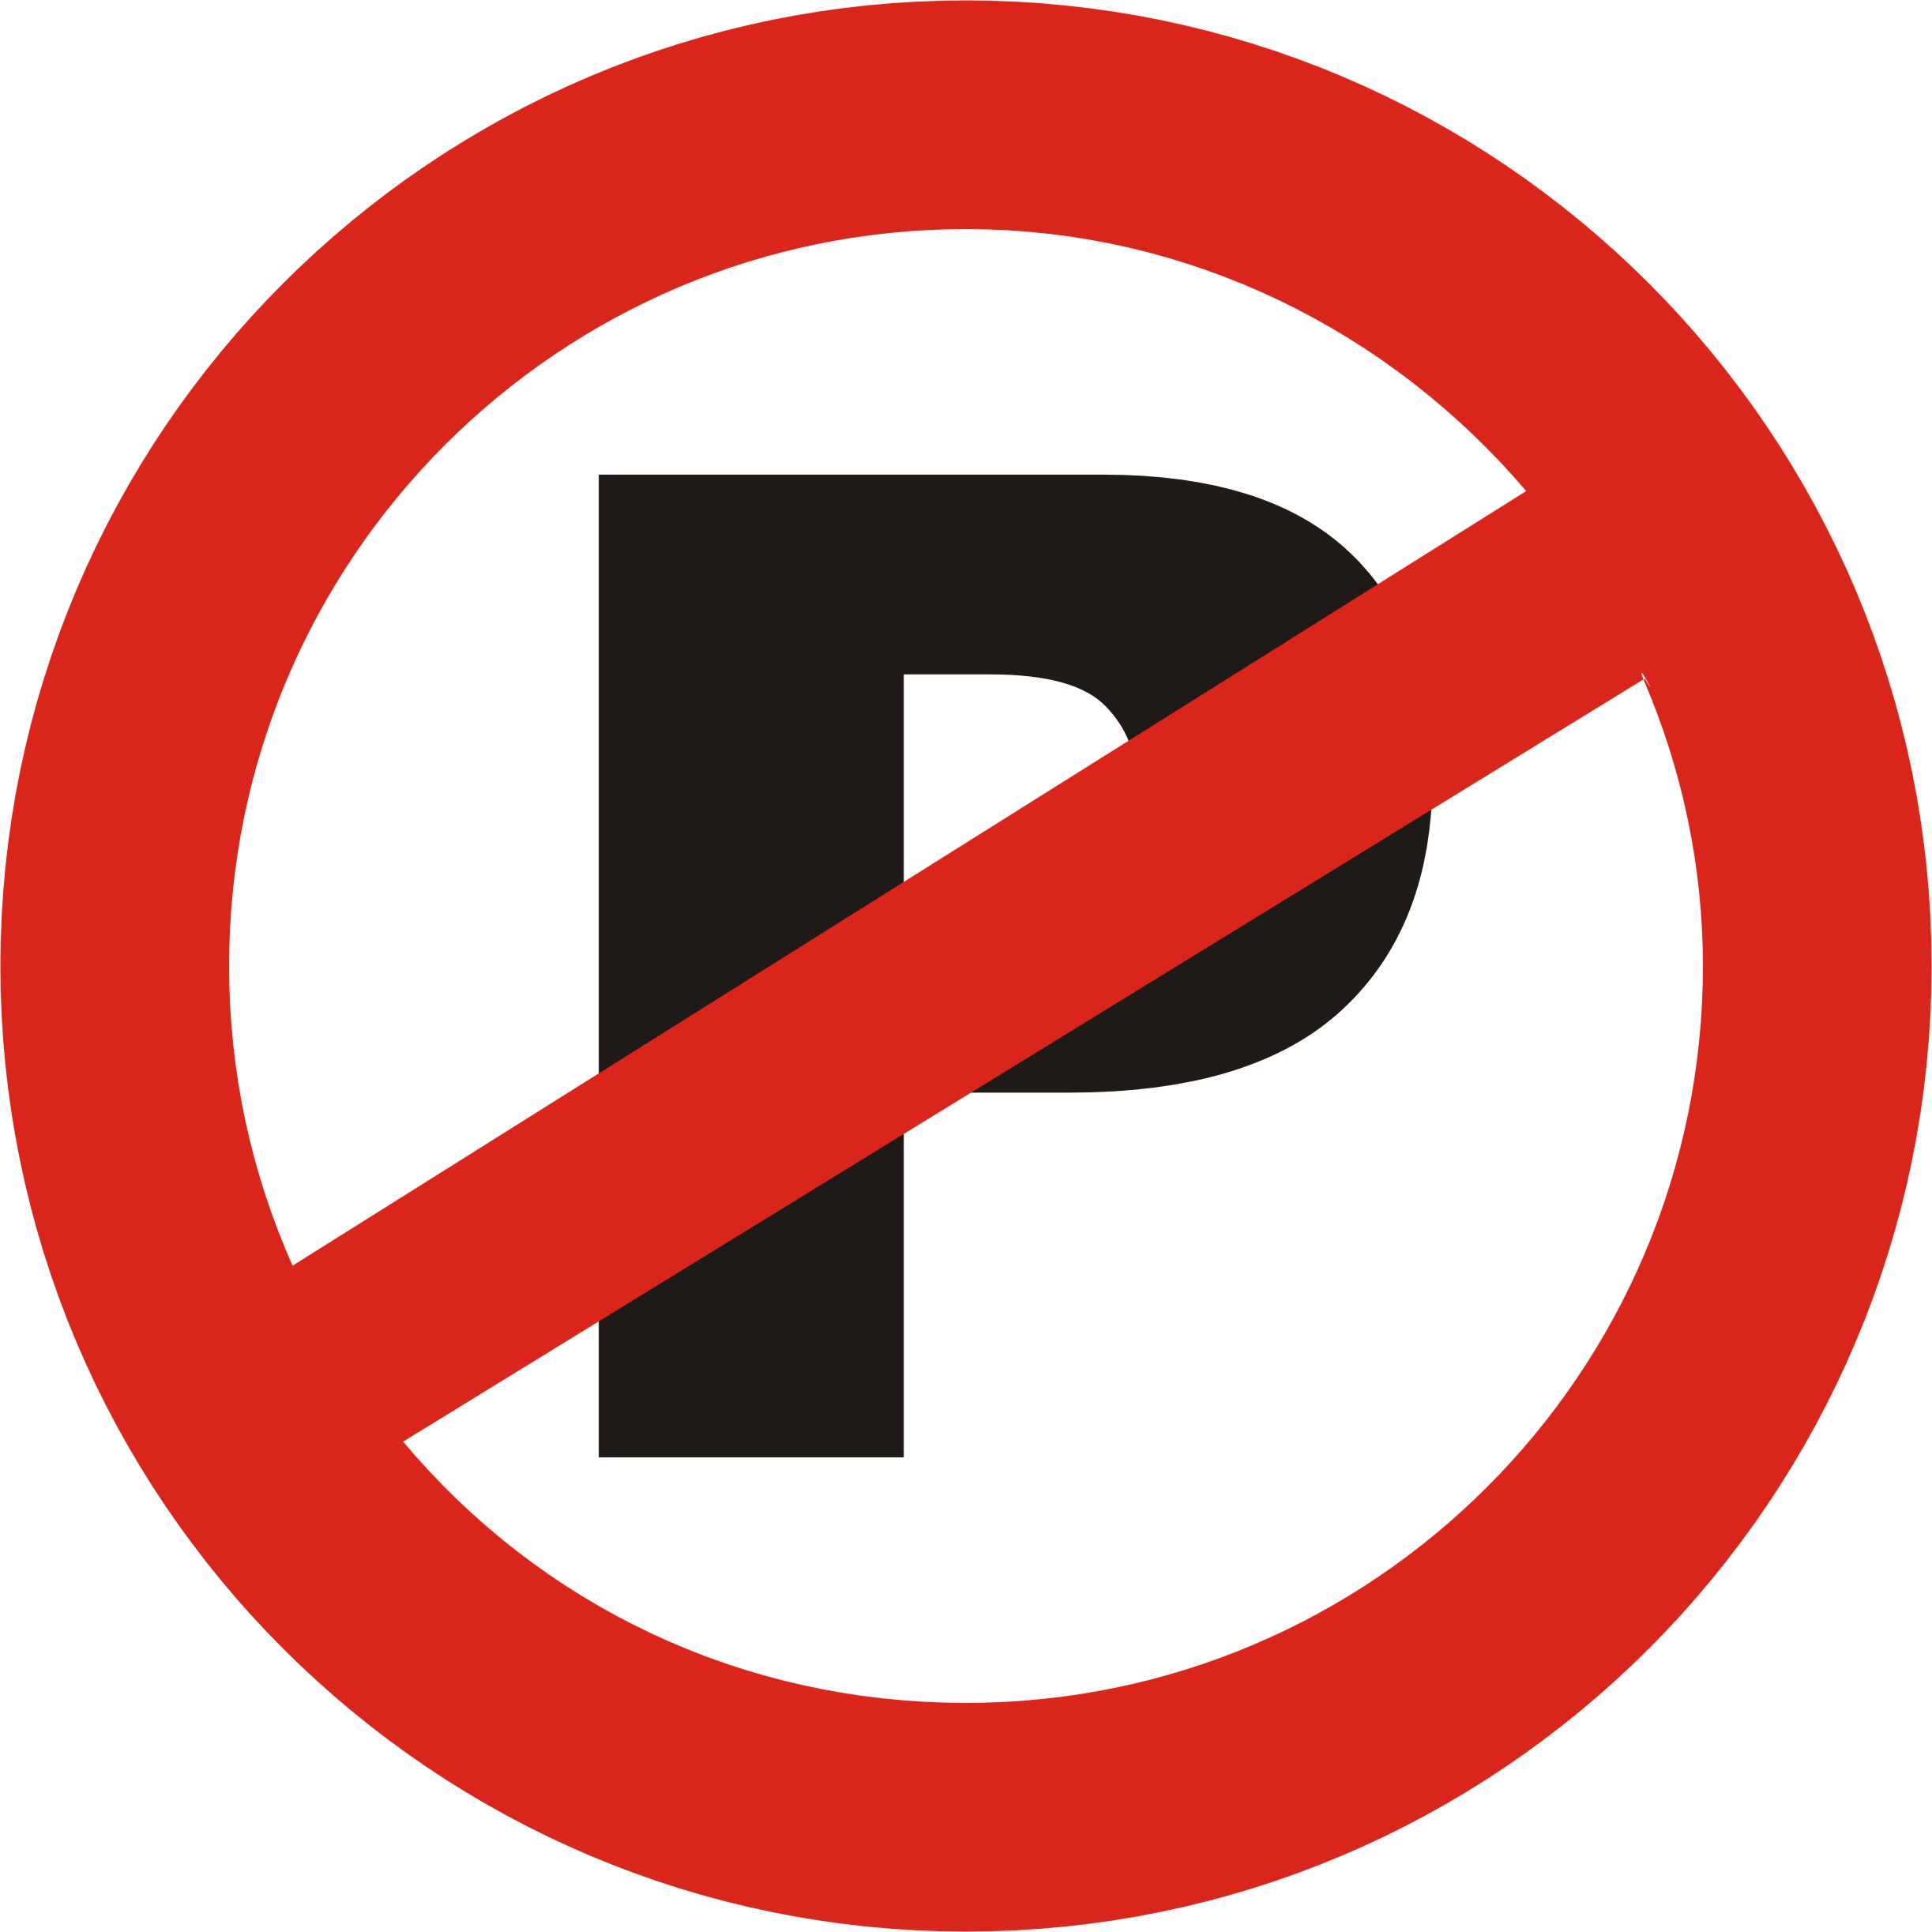 Road Sign No Parking.jpg - ClipArt Best - ClipArt Best